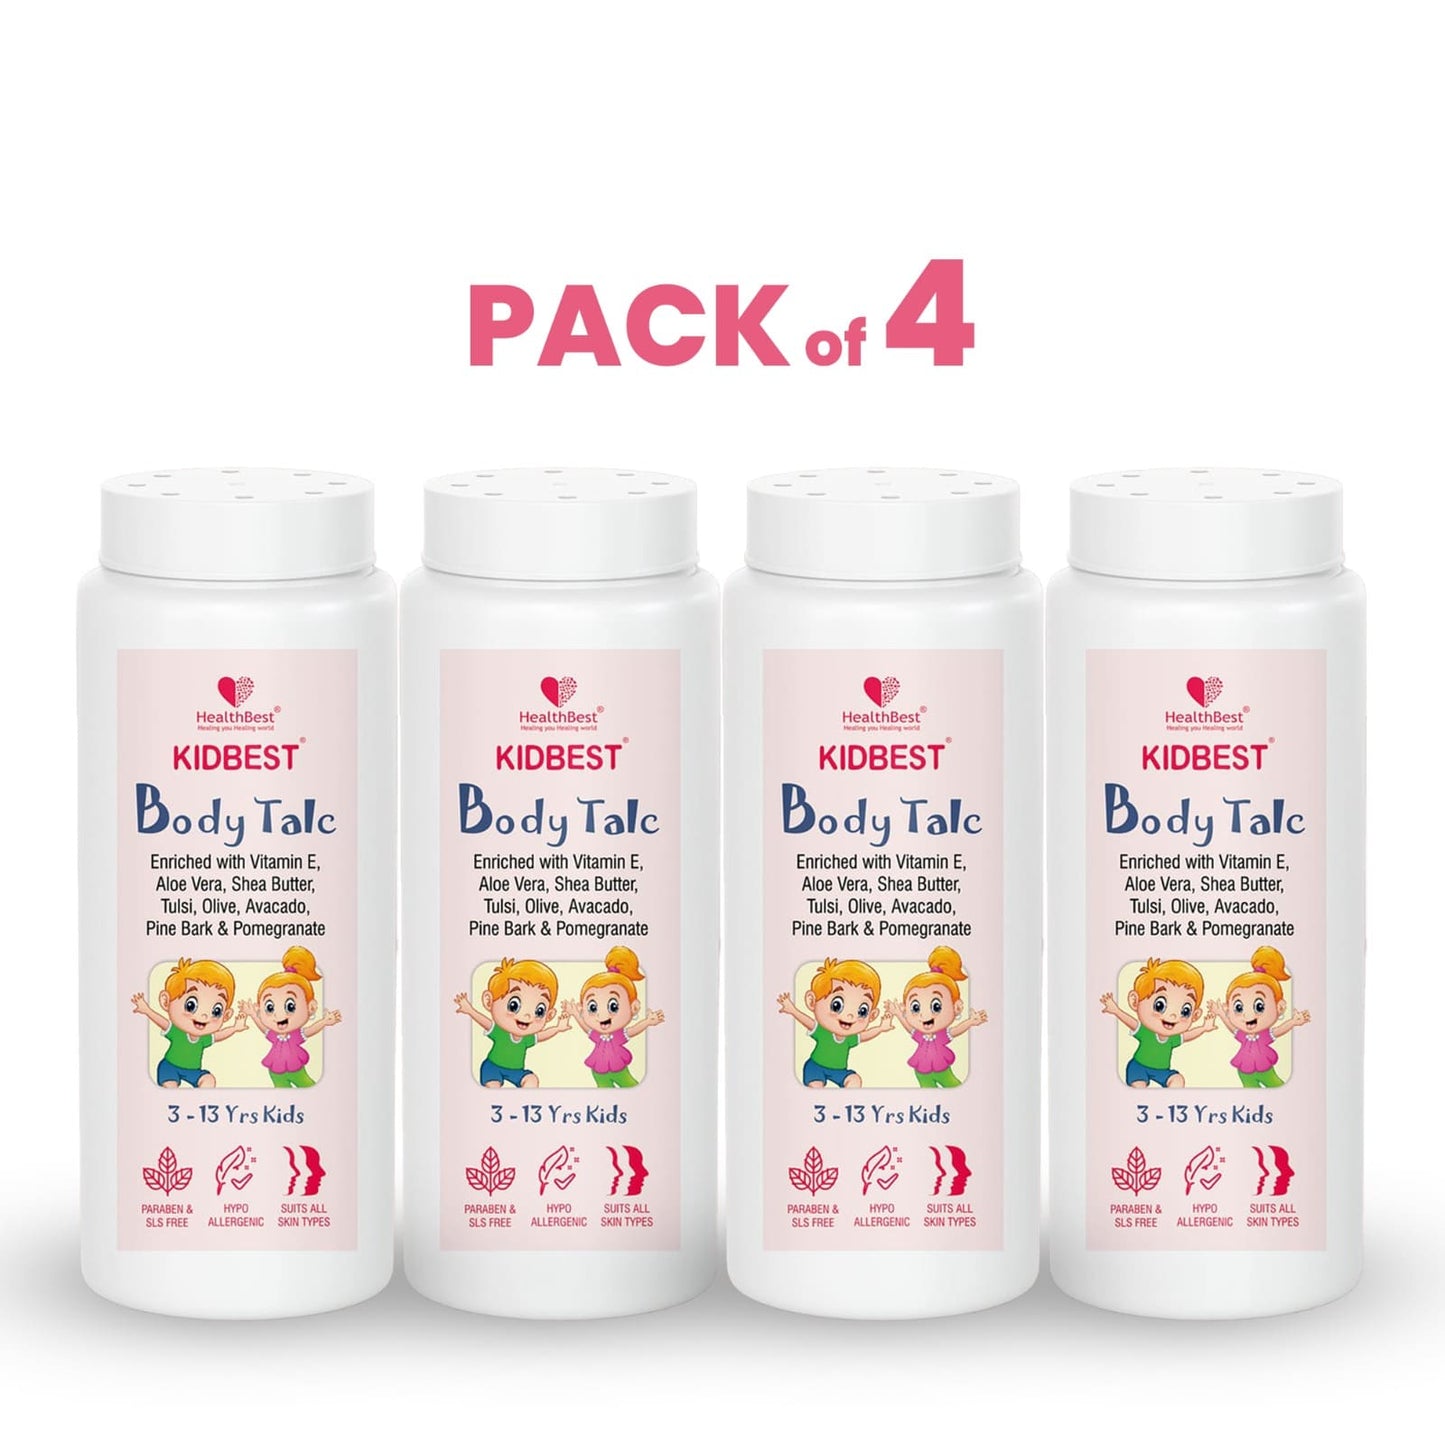 HealthBest Kidbest Body Talc Pack of 4